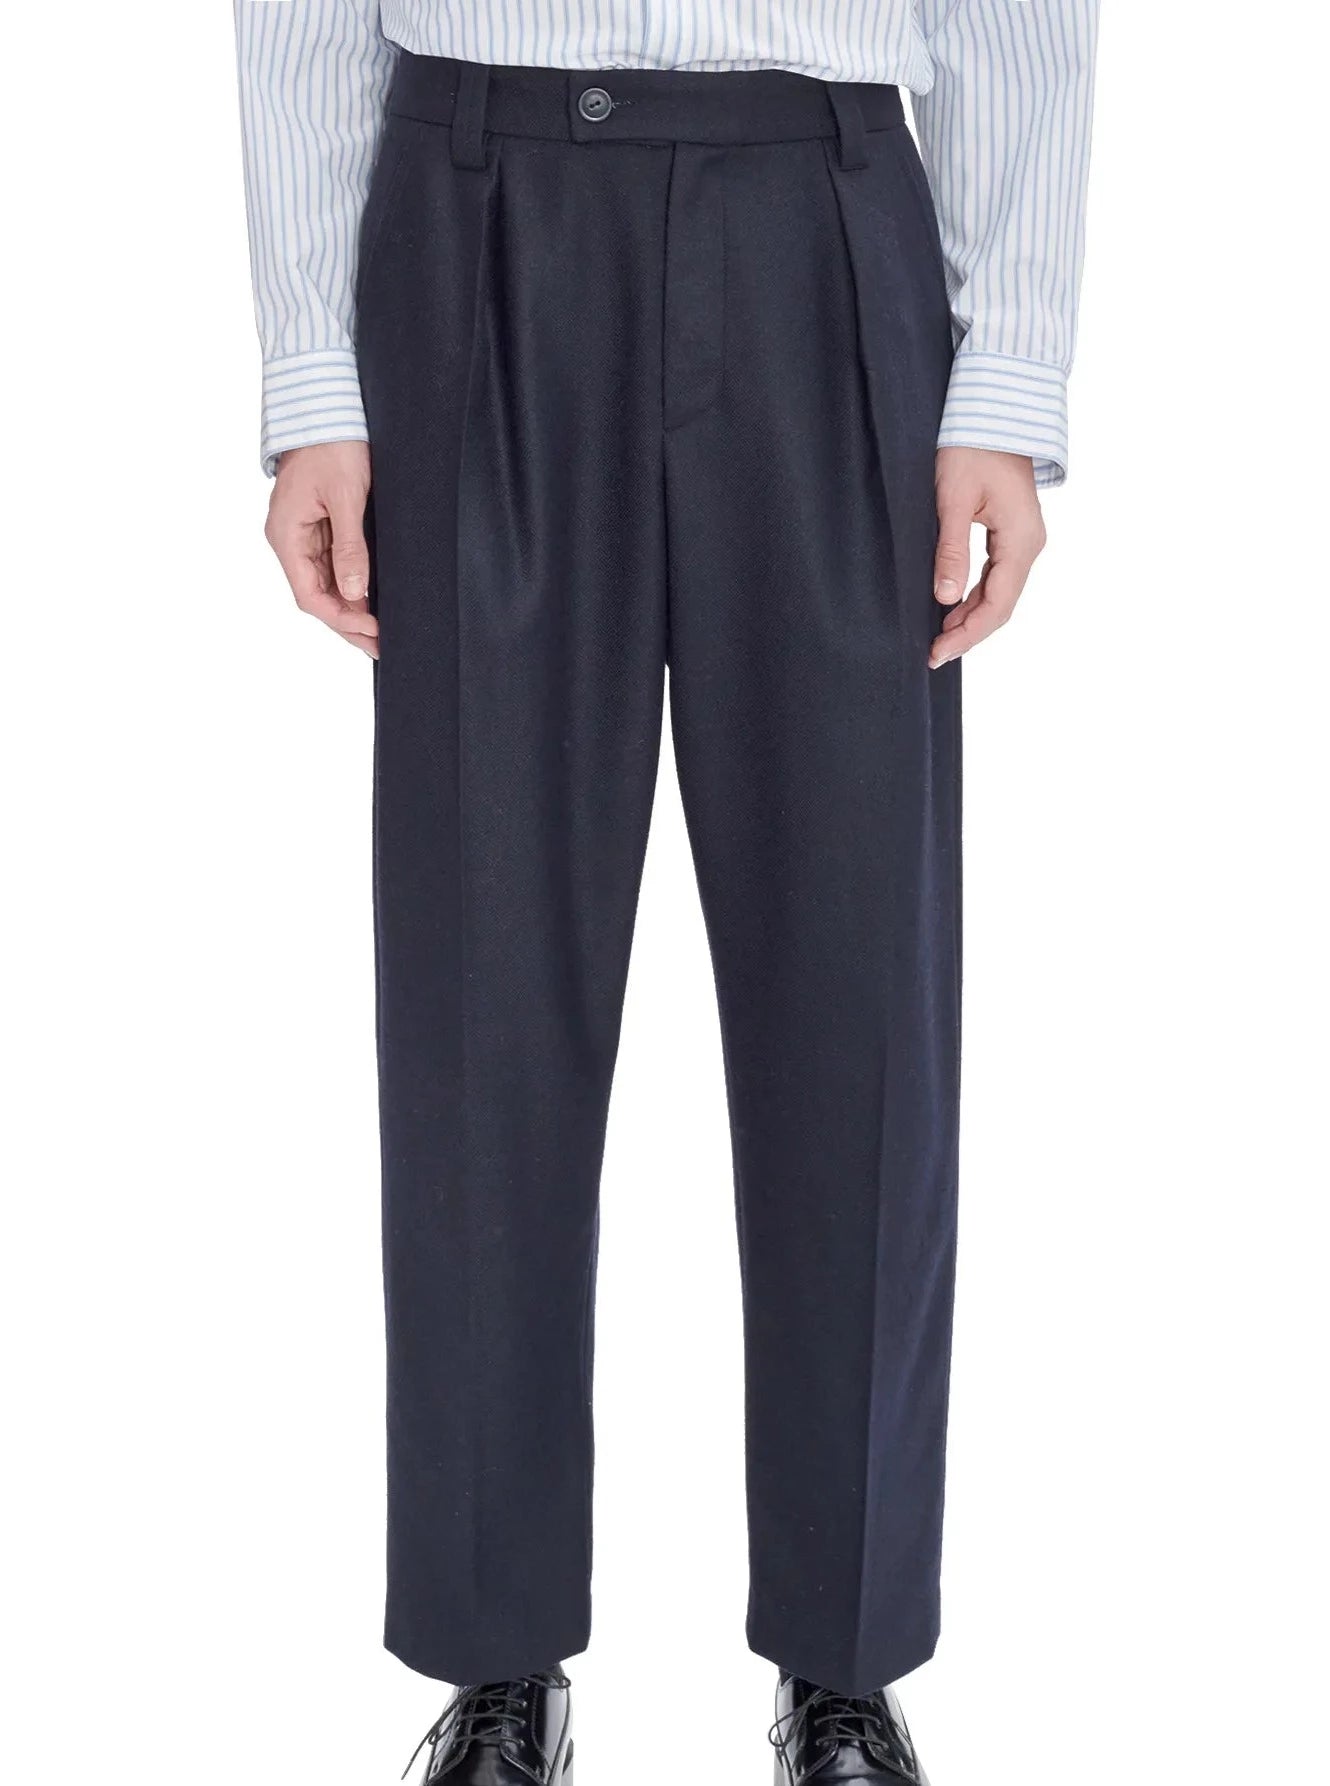 A.P.C 'Renato' Navy Trousers